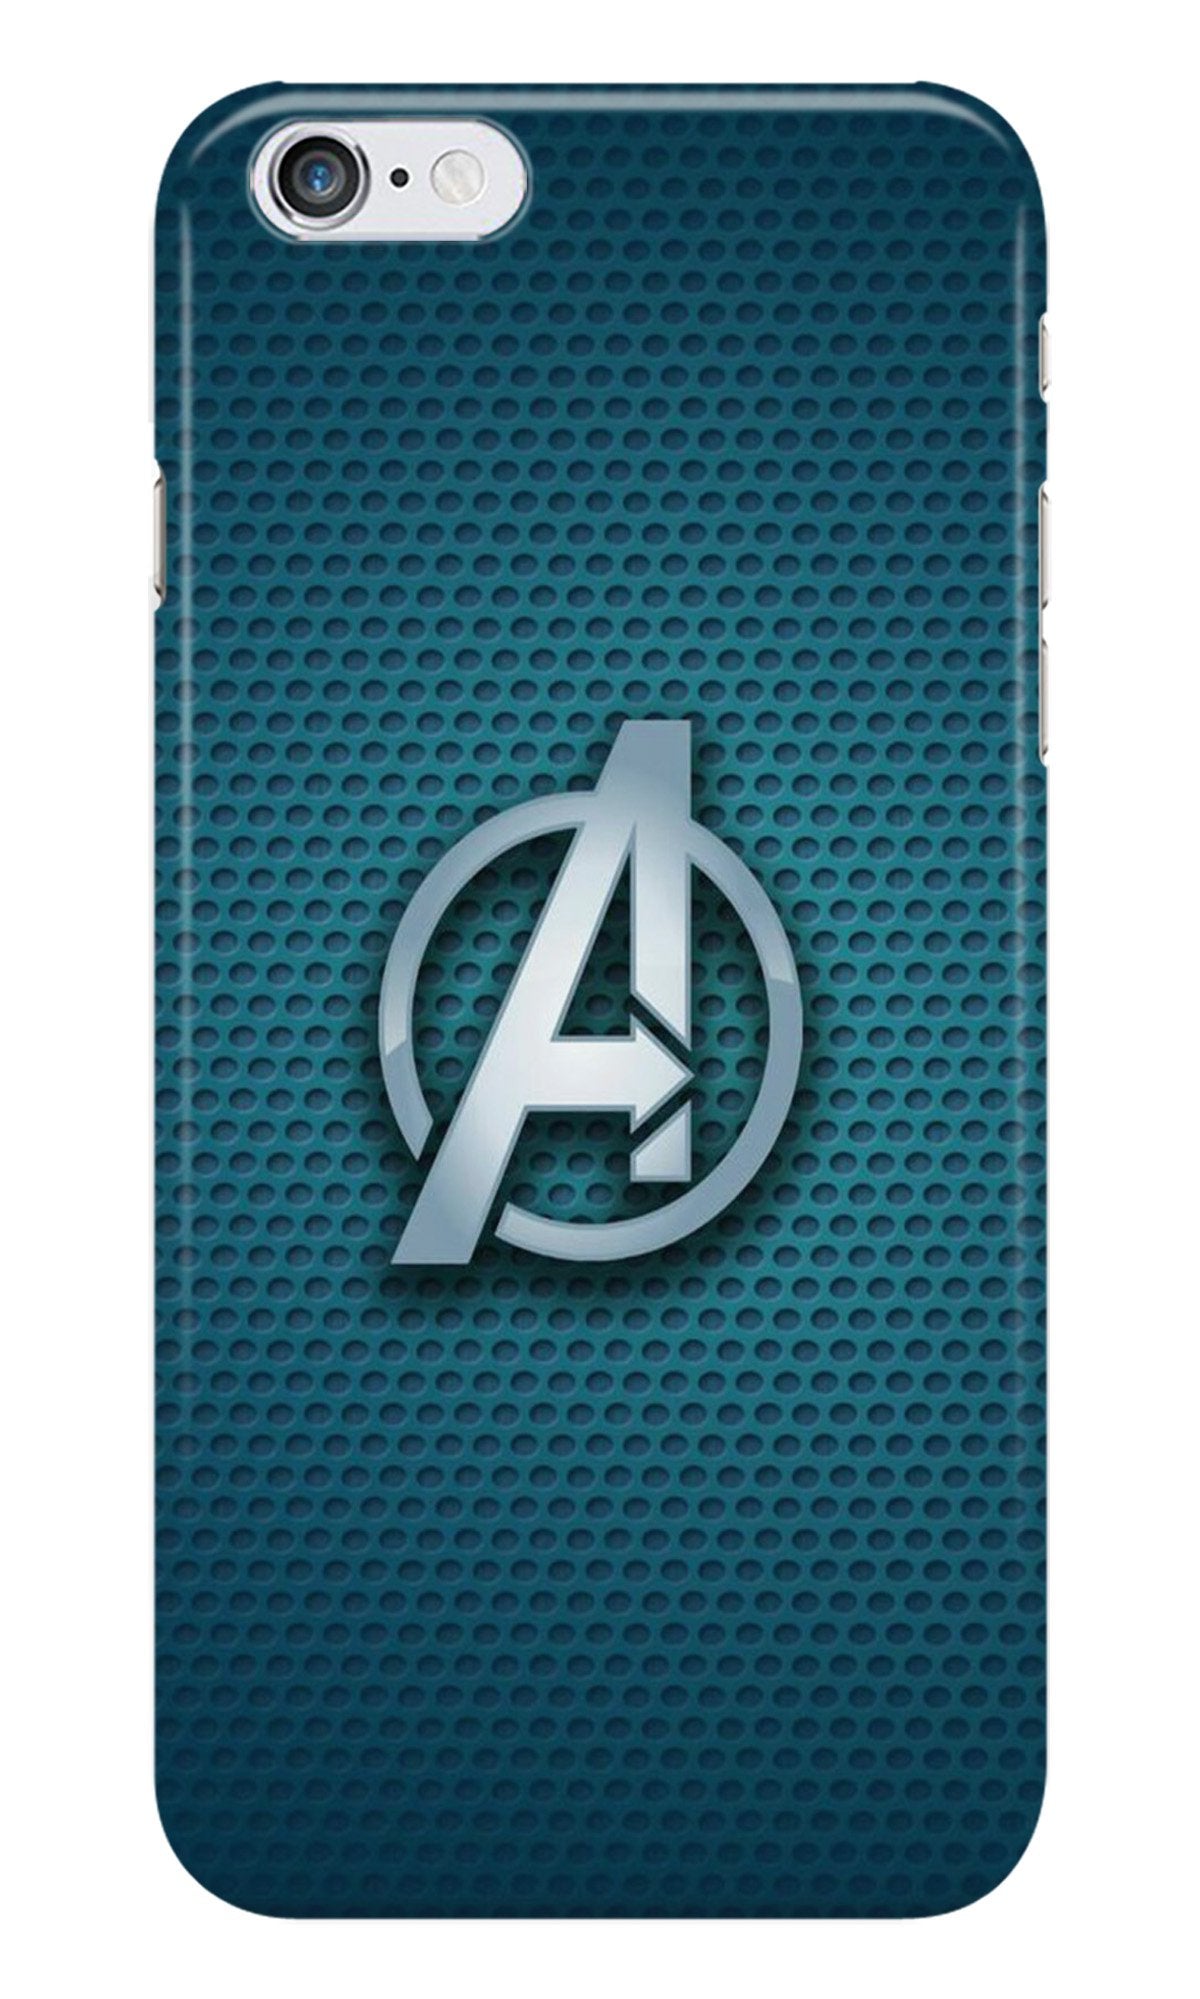 Avengers Case for Iphone 6 Plus/6S Plus (Design No. 246)